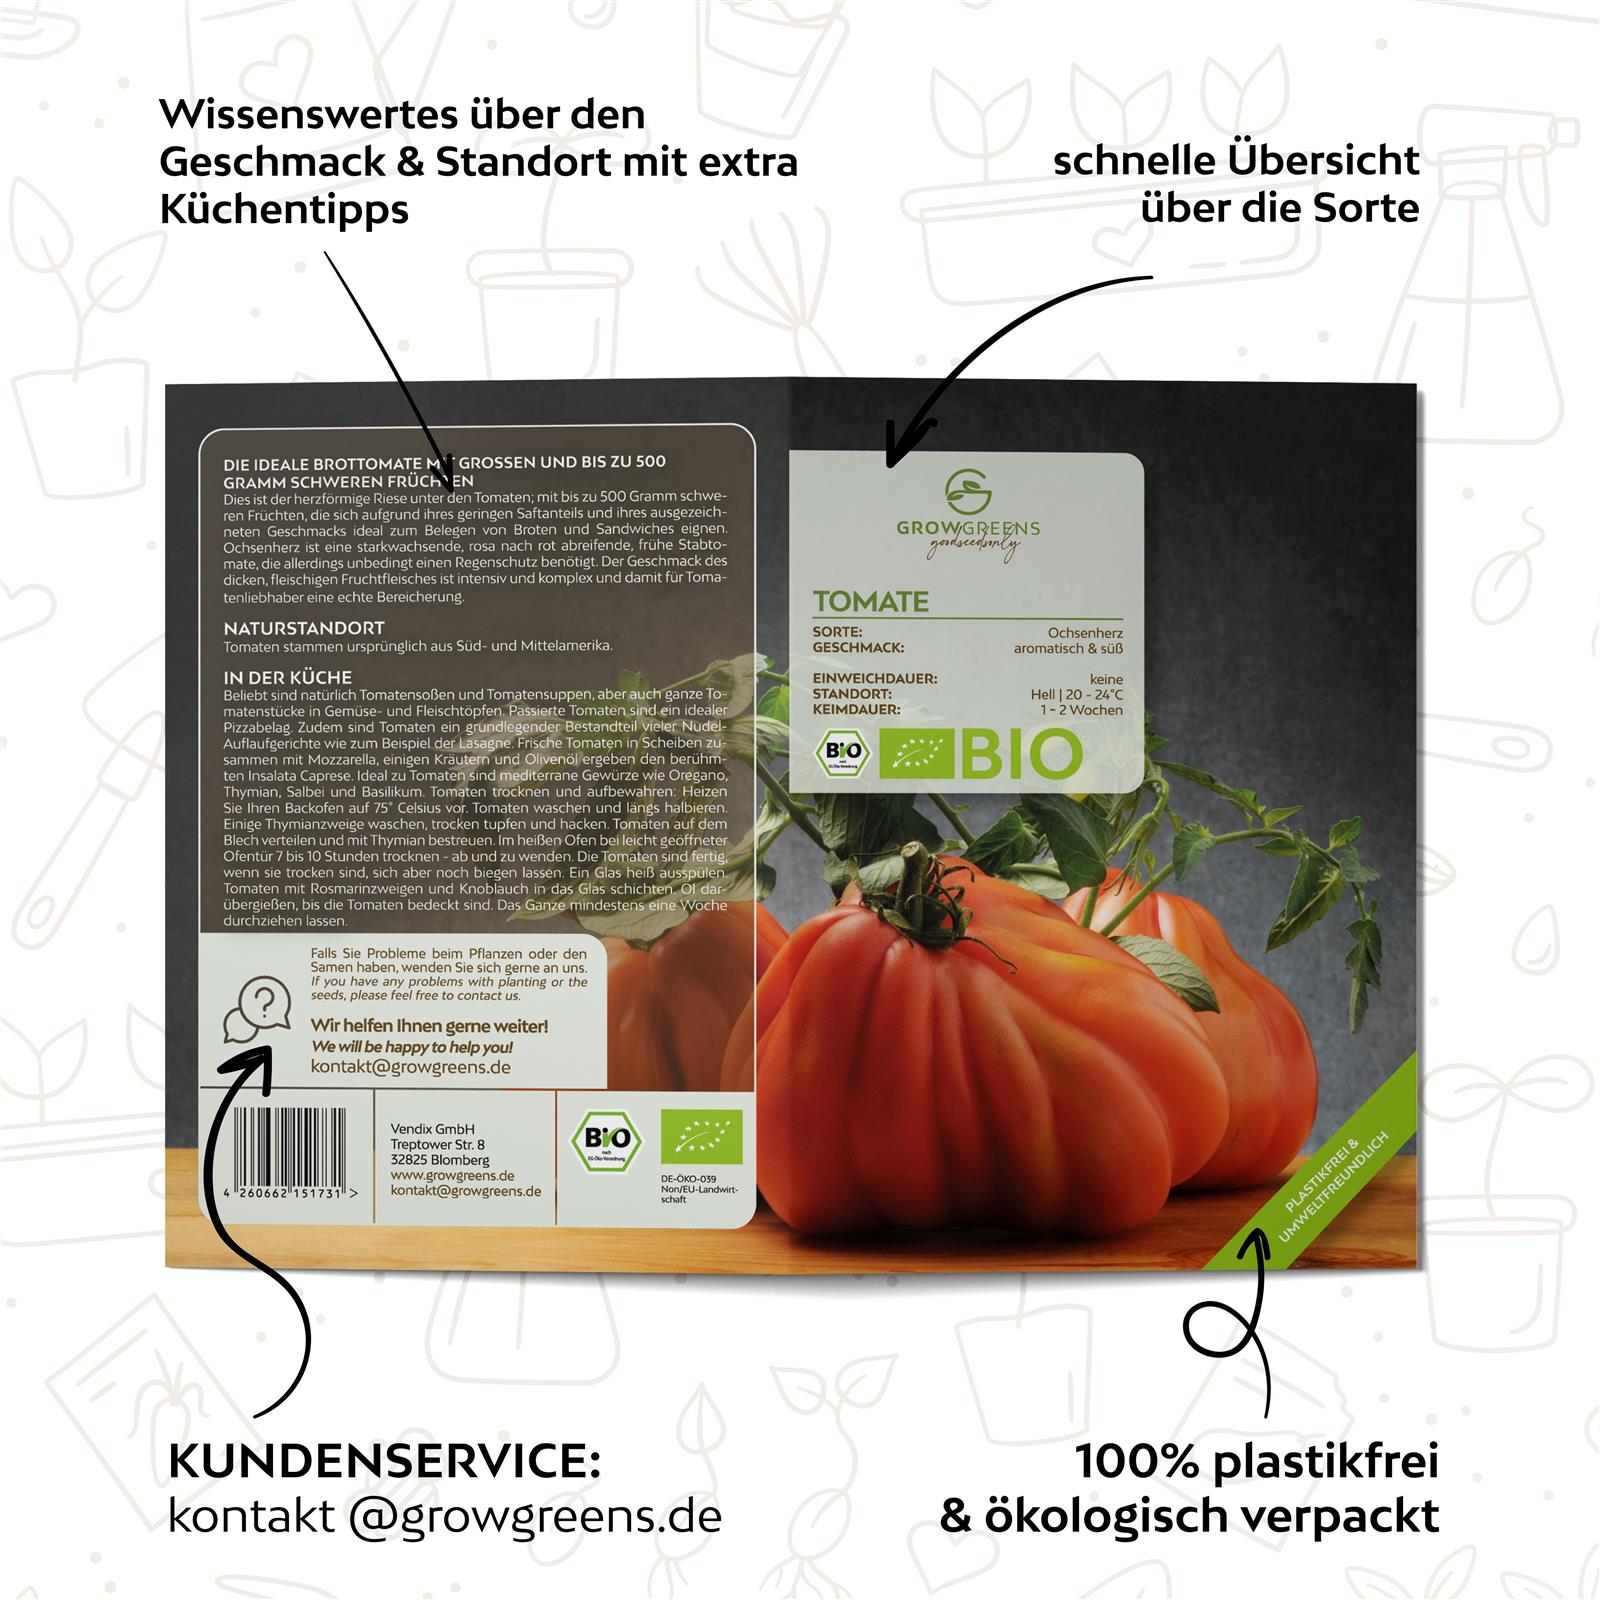 BIO Tomatensamen (Ochsenherz) - Tomaten Saatgut aus biologischem Anbau (10 Korn)